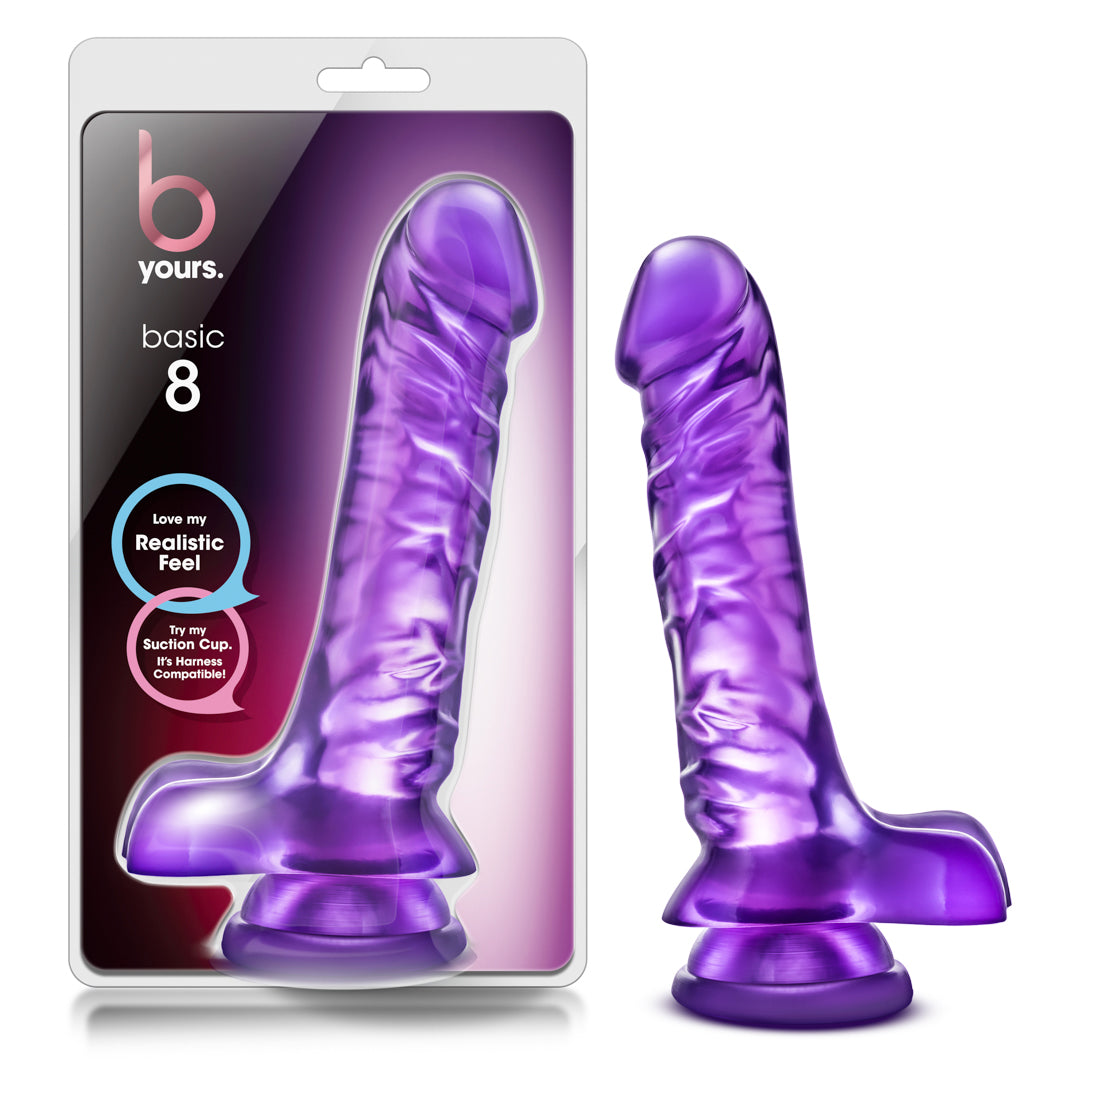 B Yours - Basic 8 - Purple BL-28411